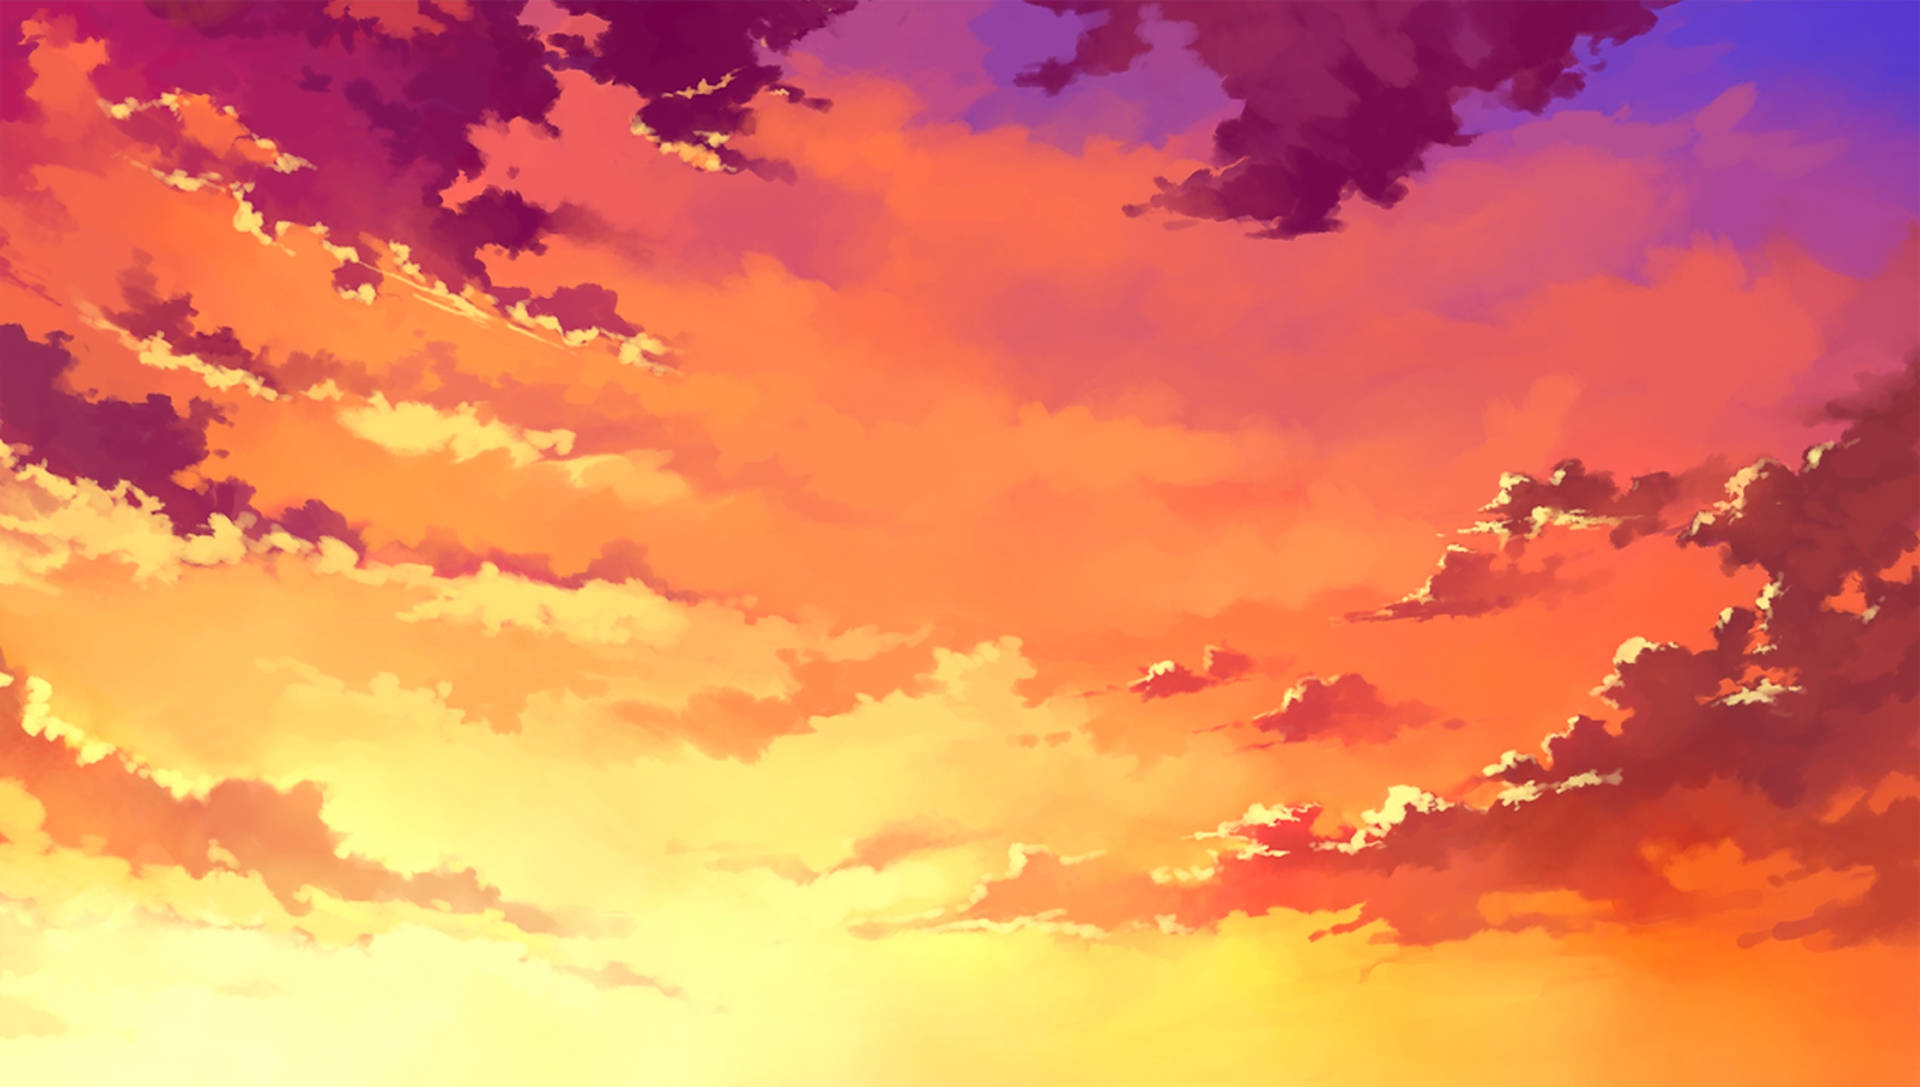 Orange Clouds In Sunset Sky Wallpaper